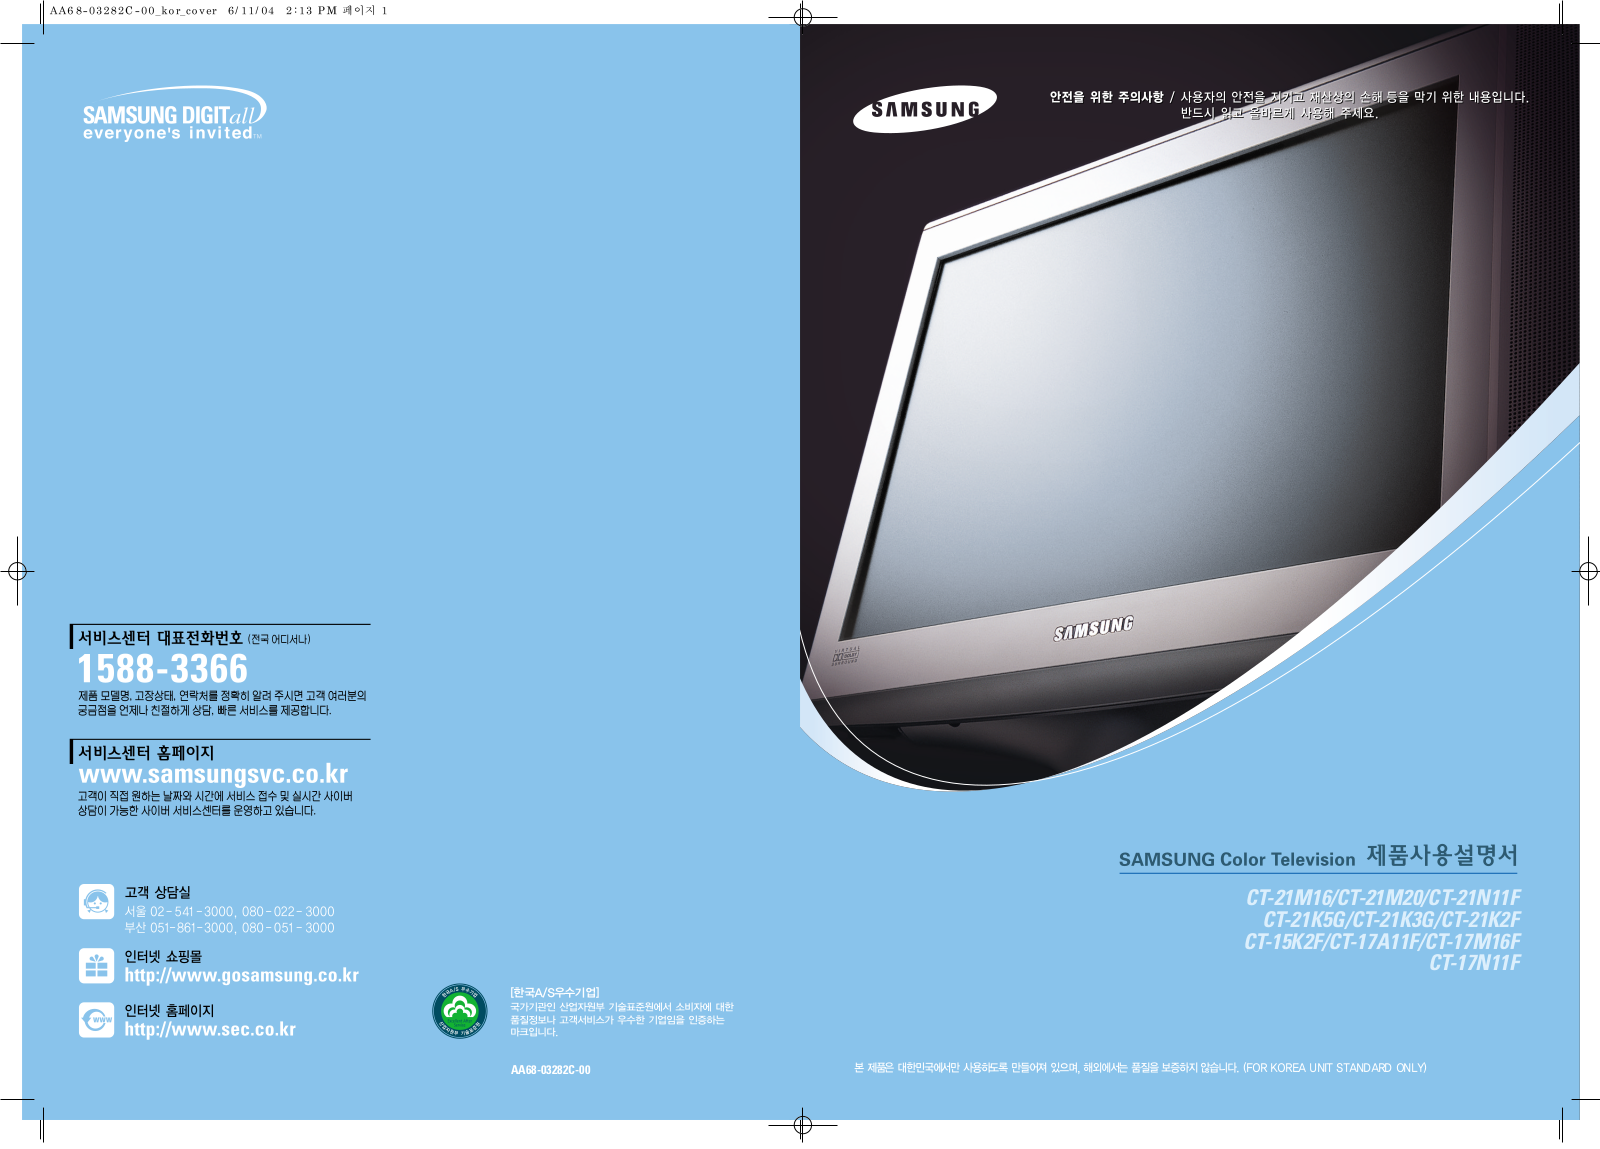 Samsung CT-21N11F, CT-21K2F, CT-17N11F, CT-17M16F, CT-17A11F User Manual